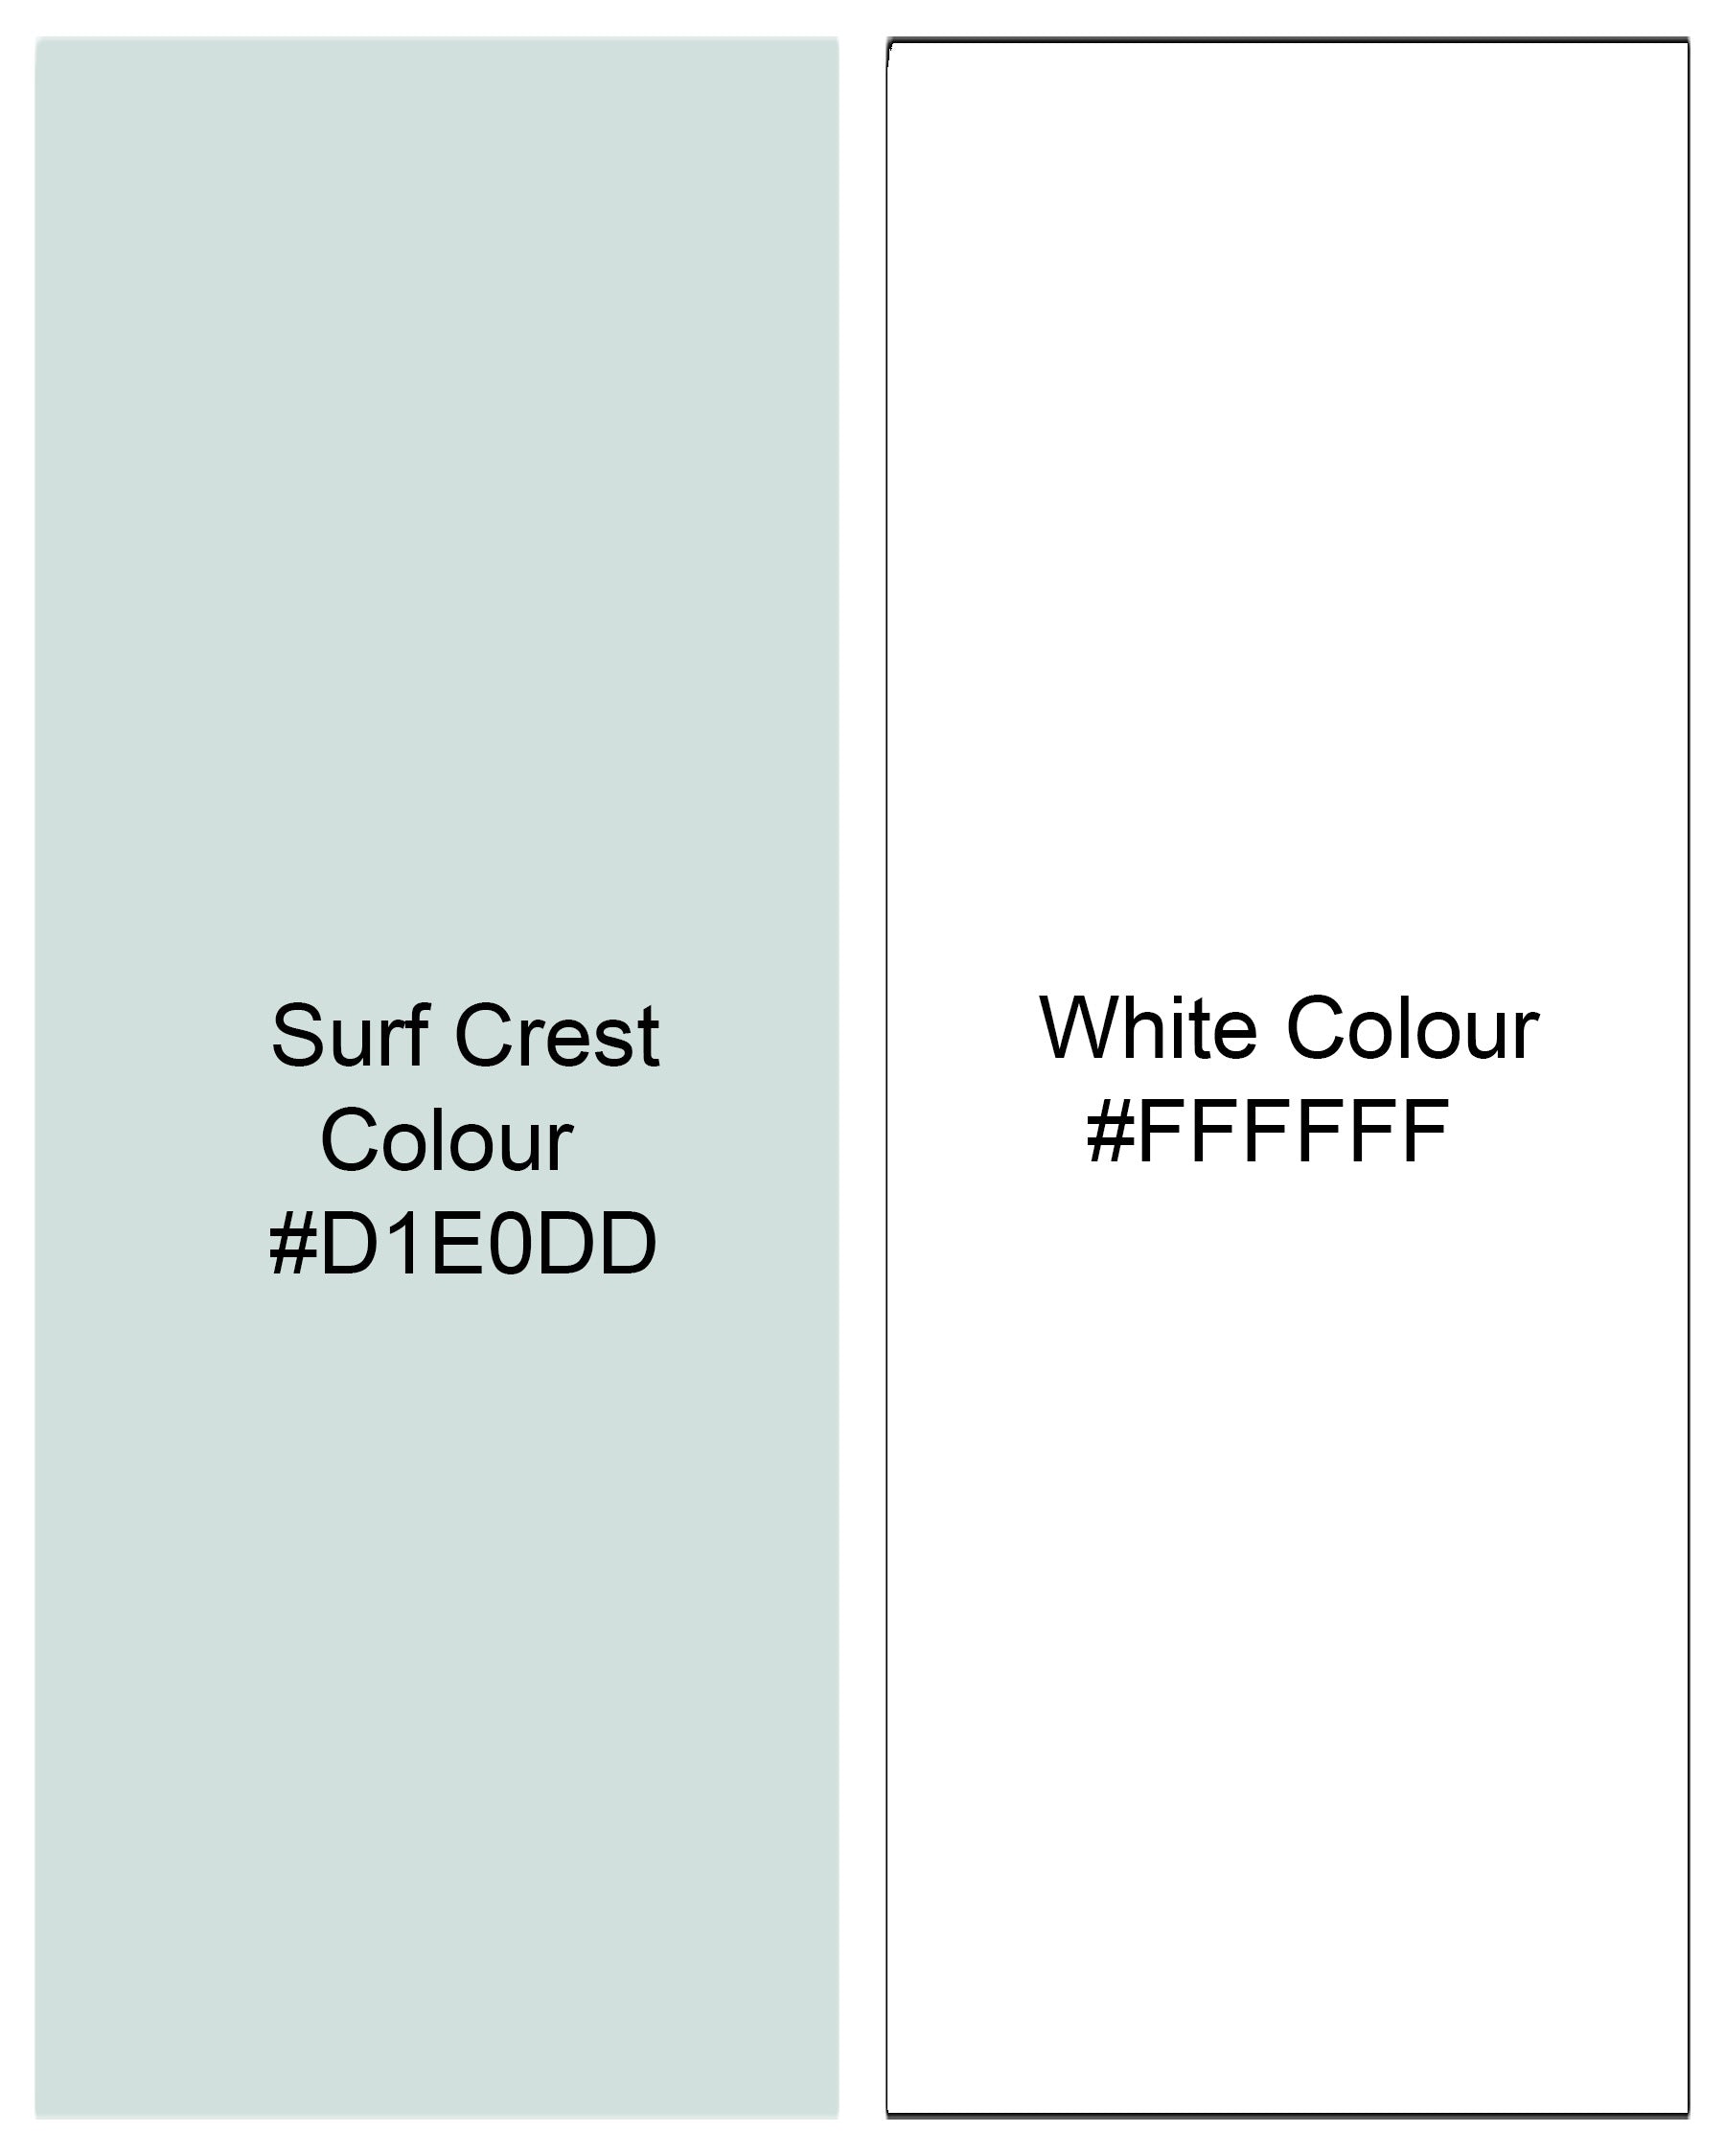 Surf Crest Light Green with White Pinstriped Premium Cotton Shirt 7962-CA-38, 7962-CA-H-38, 7962-CA-39, 7962-CA-H-39, 7962-CA-40, 7962-CA-H-40, 7962-CA-42, 7962-CA-H-42, 7962-CA-44, 7962-CA-H-44, 7962-CA-46, 7962-CA-H-46, 7962-CA-48, 7962-CA-H-48, 7962-CA-50, 7962-CA-H-50, 7962-CA-52, 7962-CA-H-52